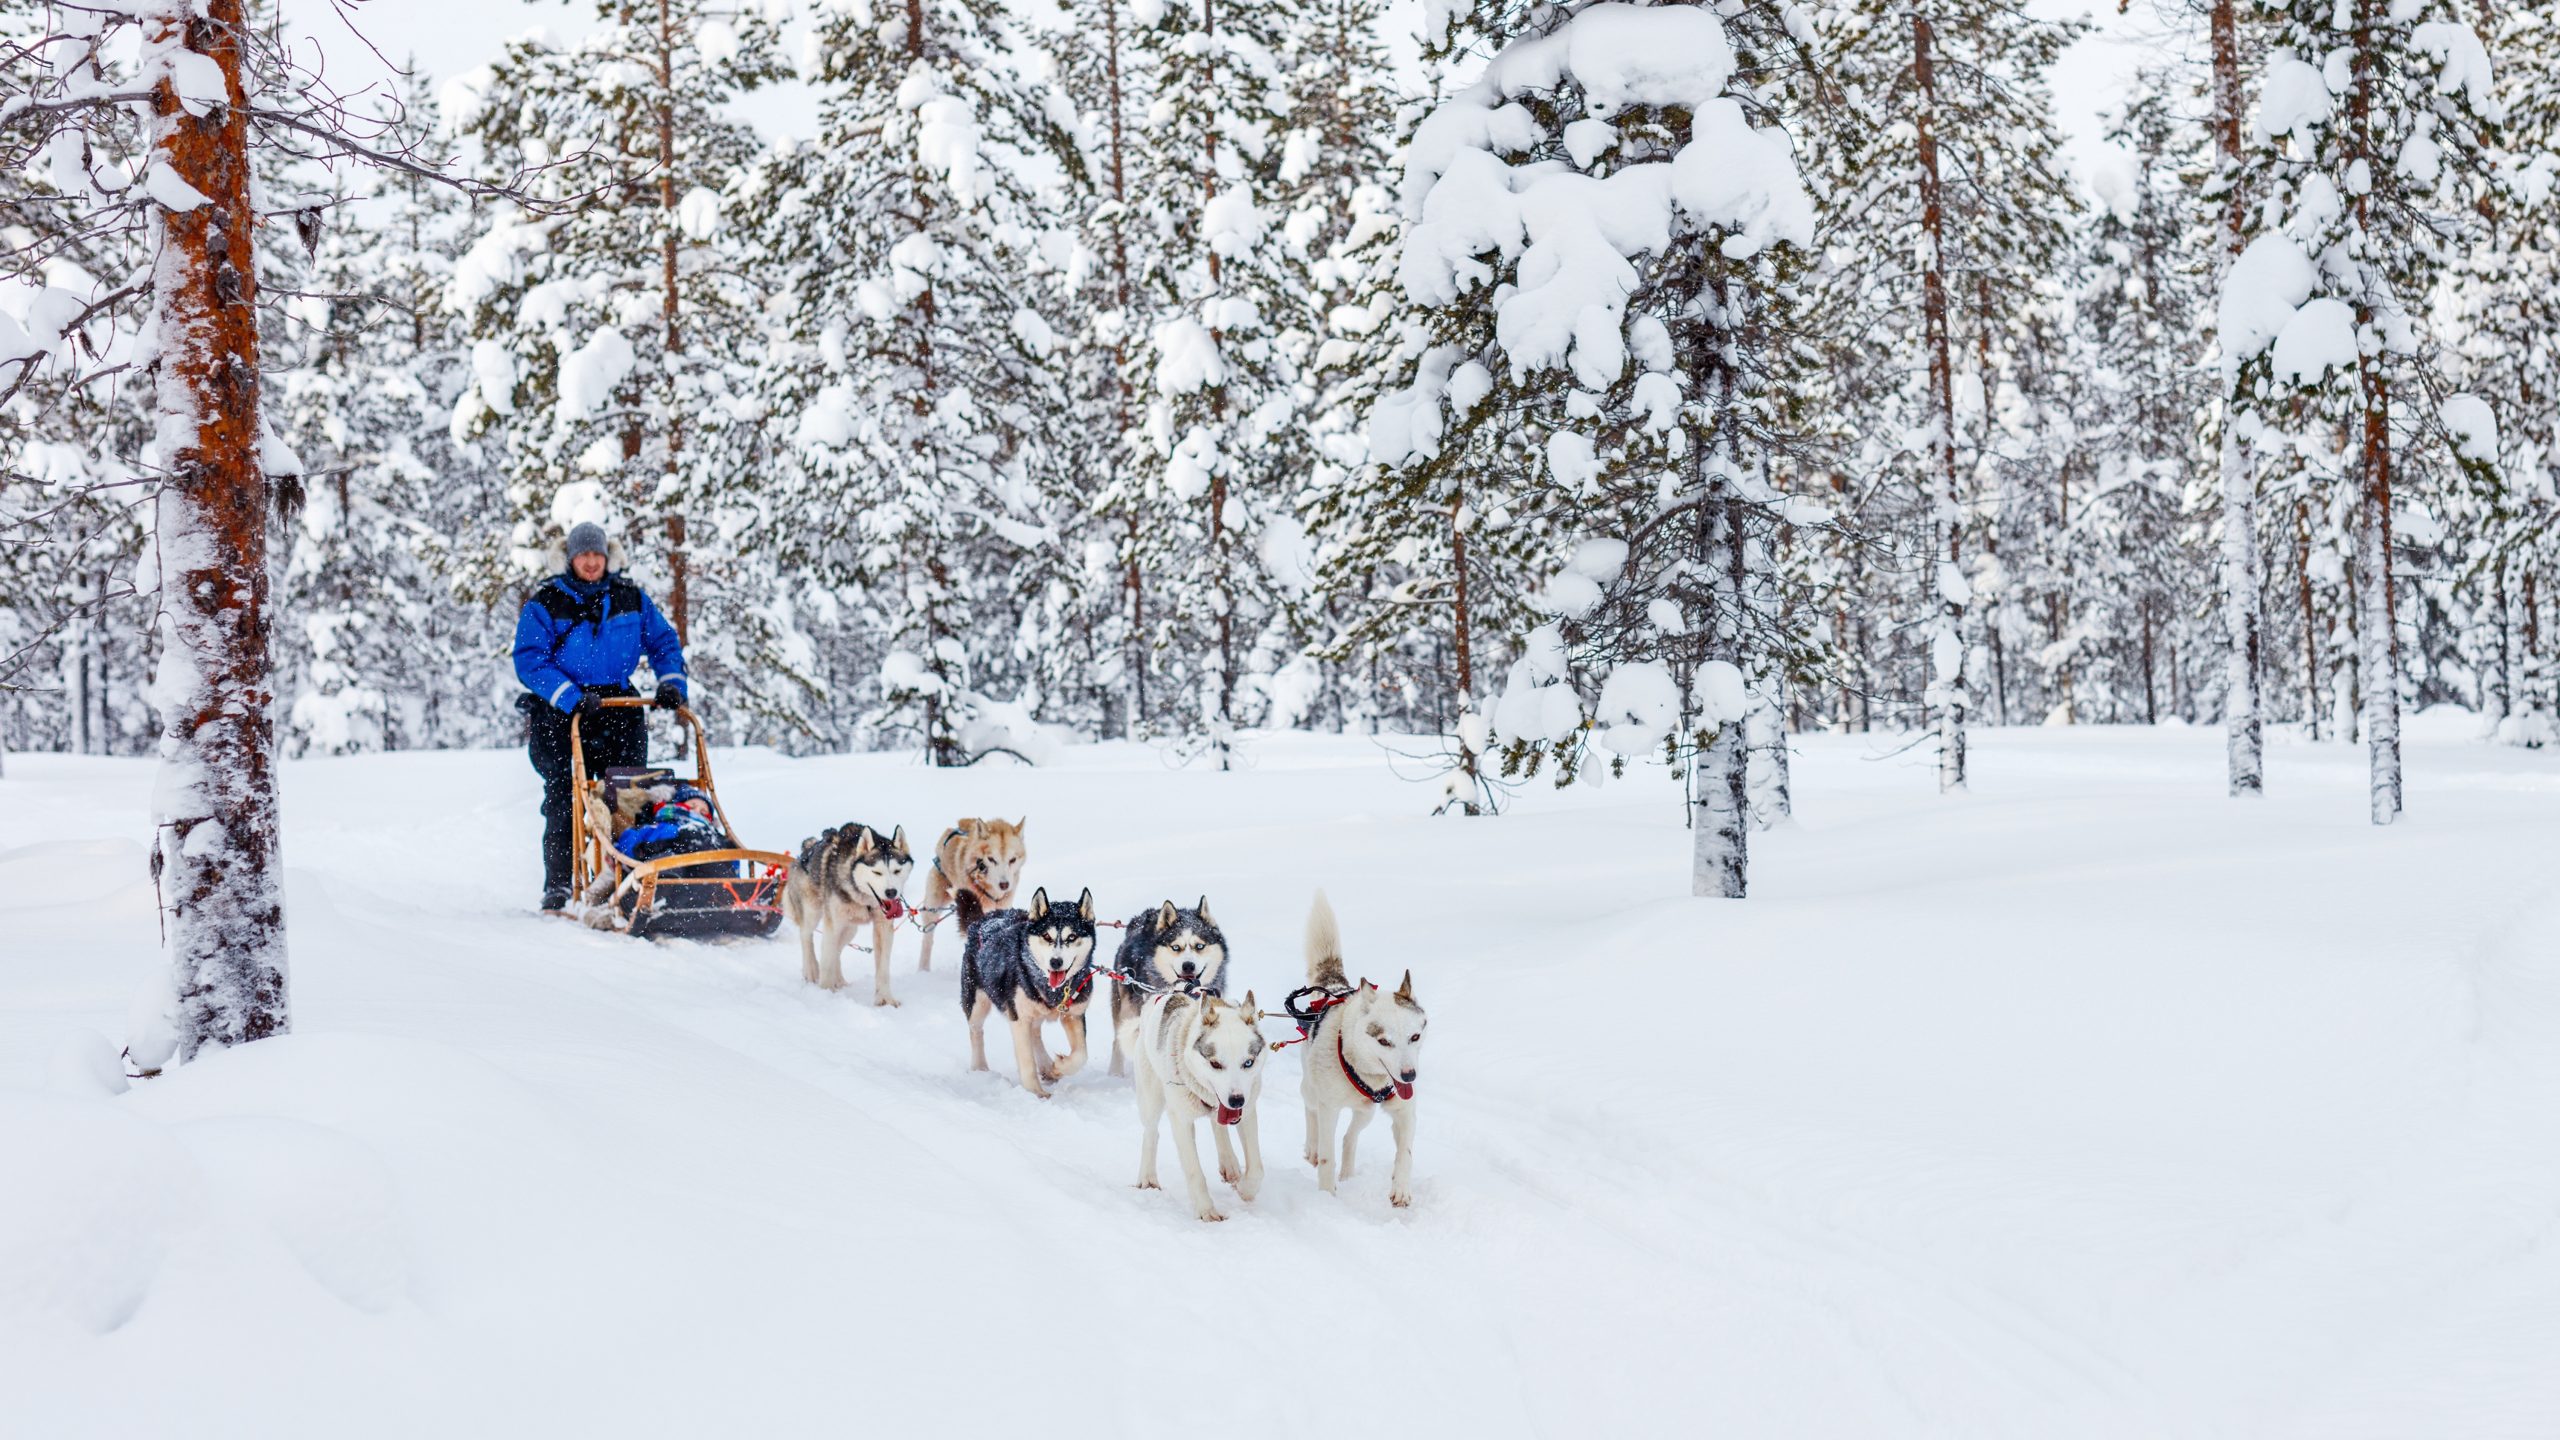 Finland Bus Charter in winter trip - Husky Safaris Adventure